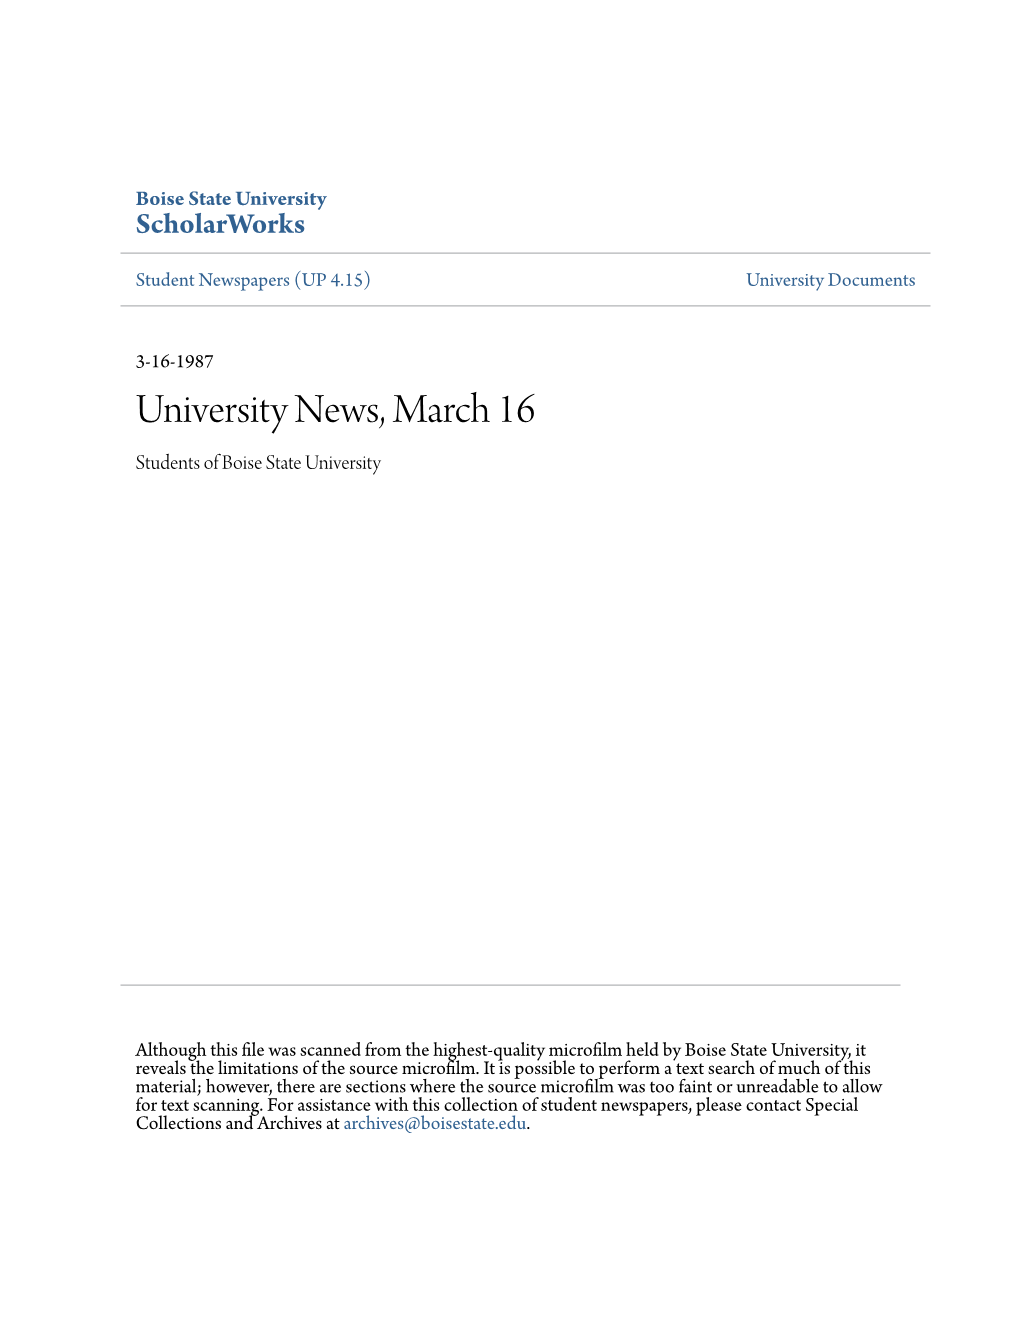 University News, March 16 Students of Boise State University